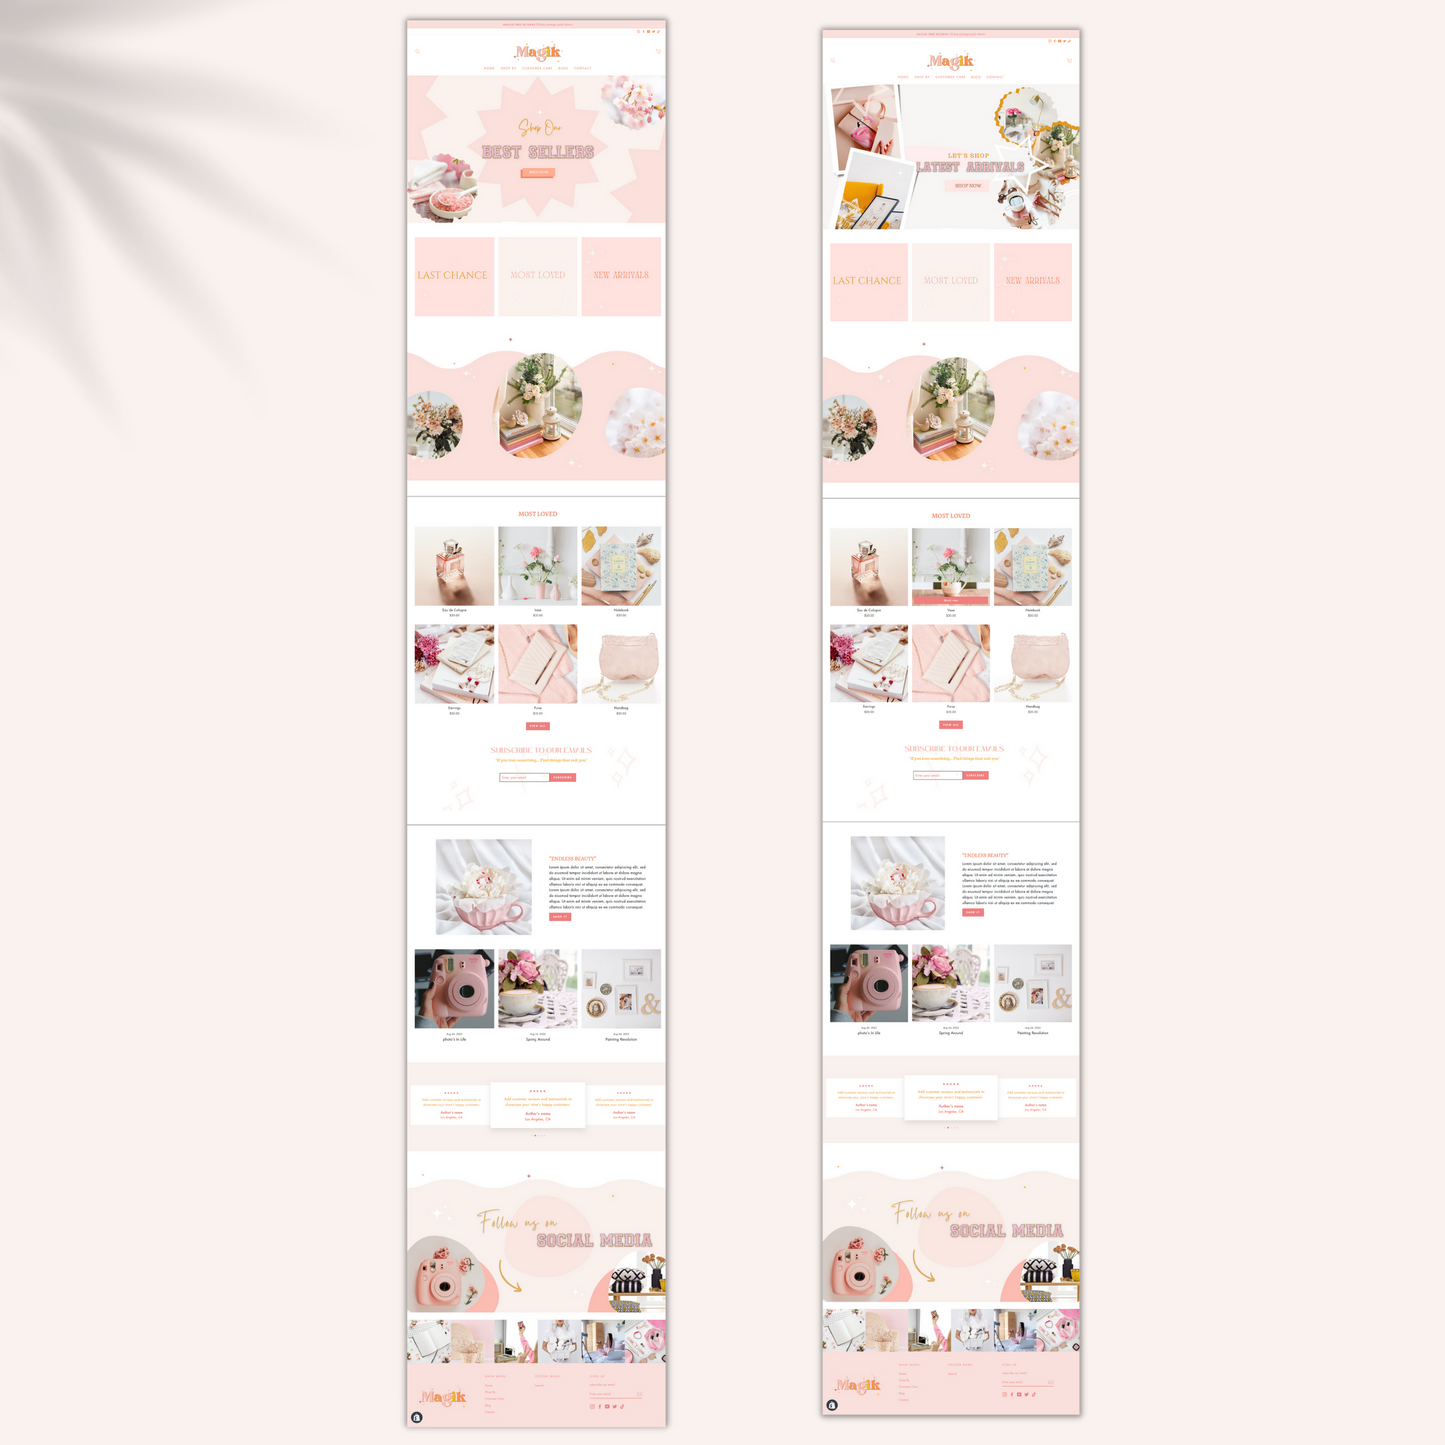 Magik - Pastel Pink Shopify Theme| Stony Clover letters - Shopify Banners - Shopify 2.0 - Theme Template - Bright colors shopify website